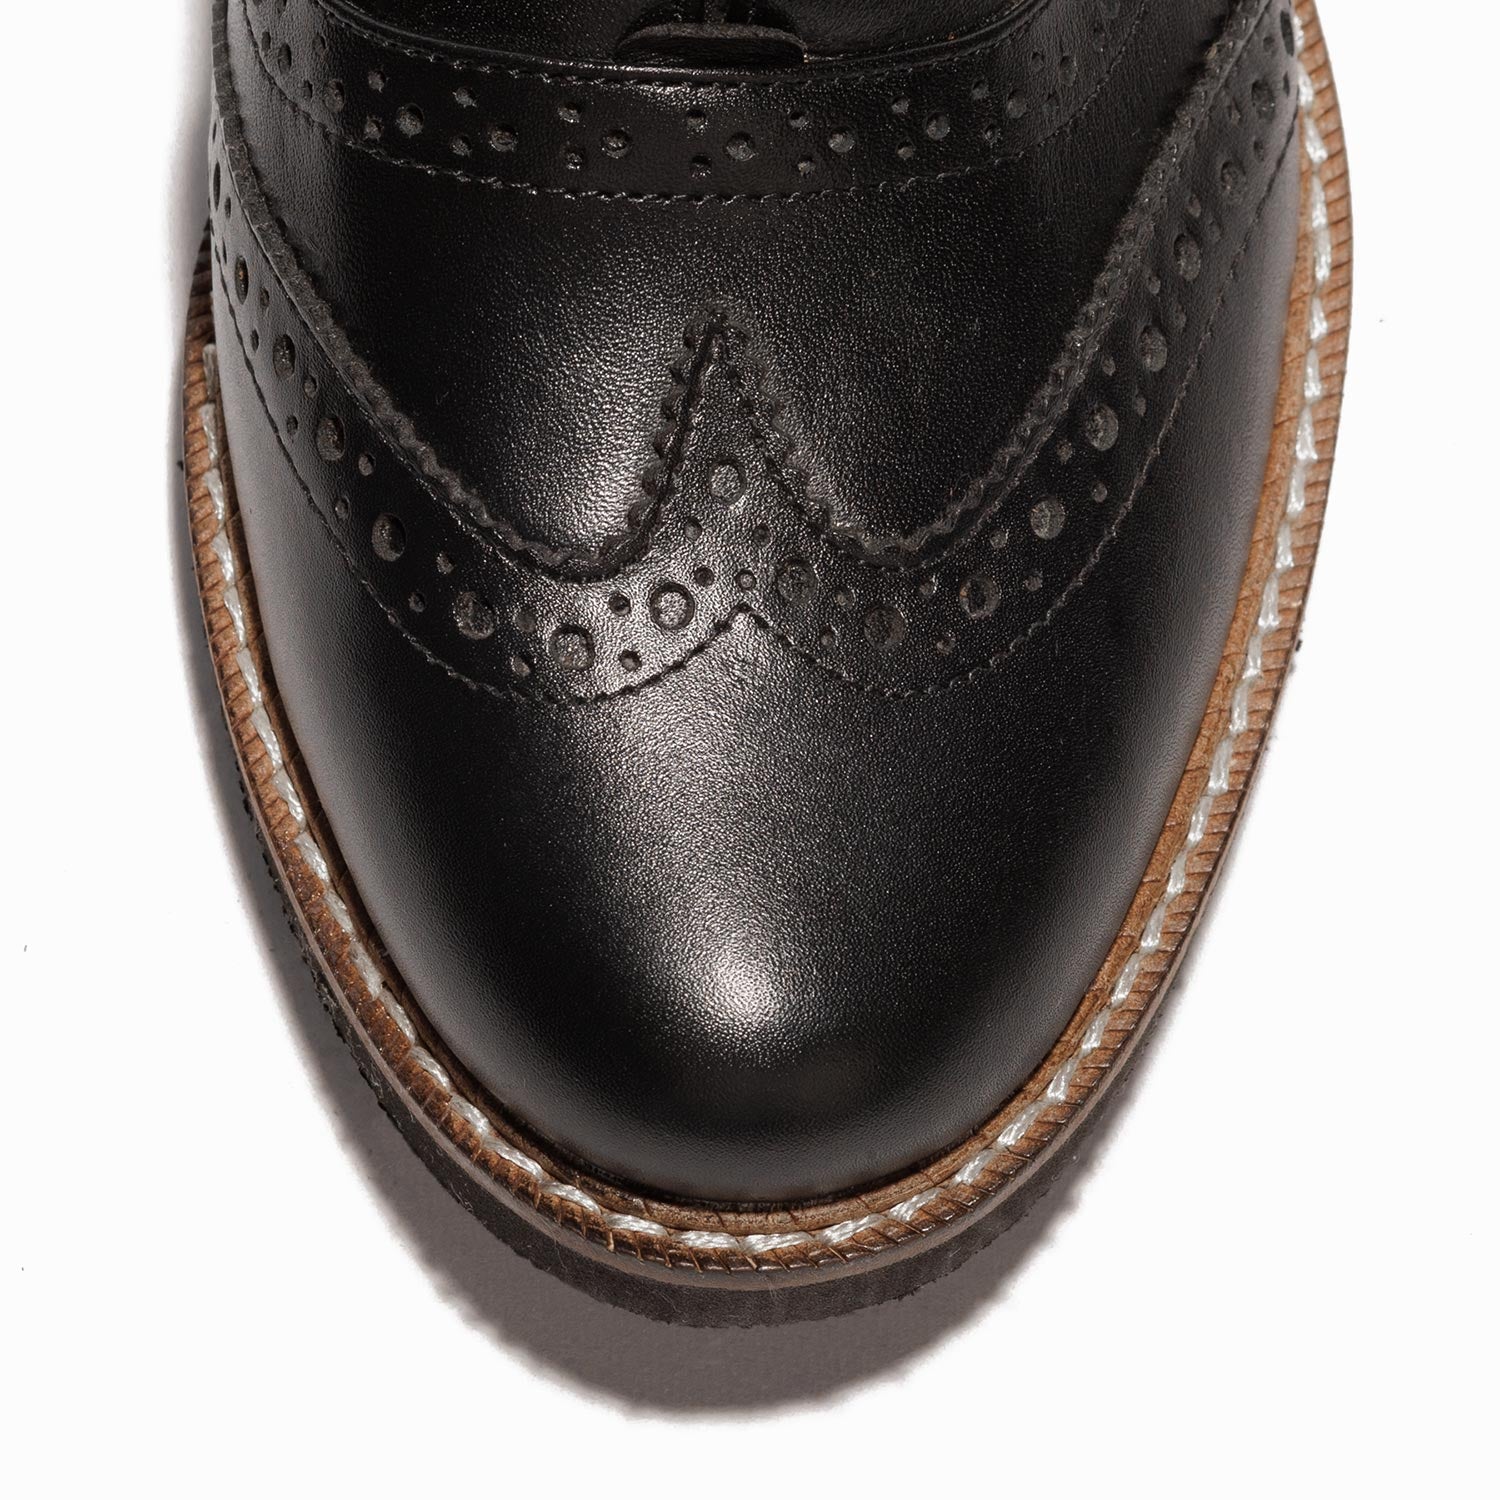 Women Oxford Black Shoes - Tayree